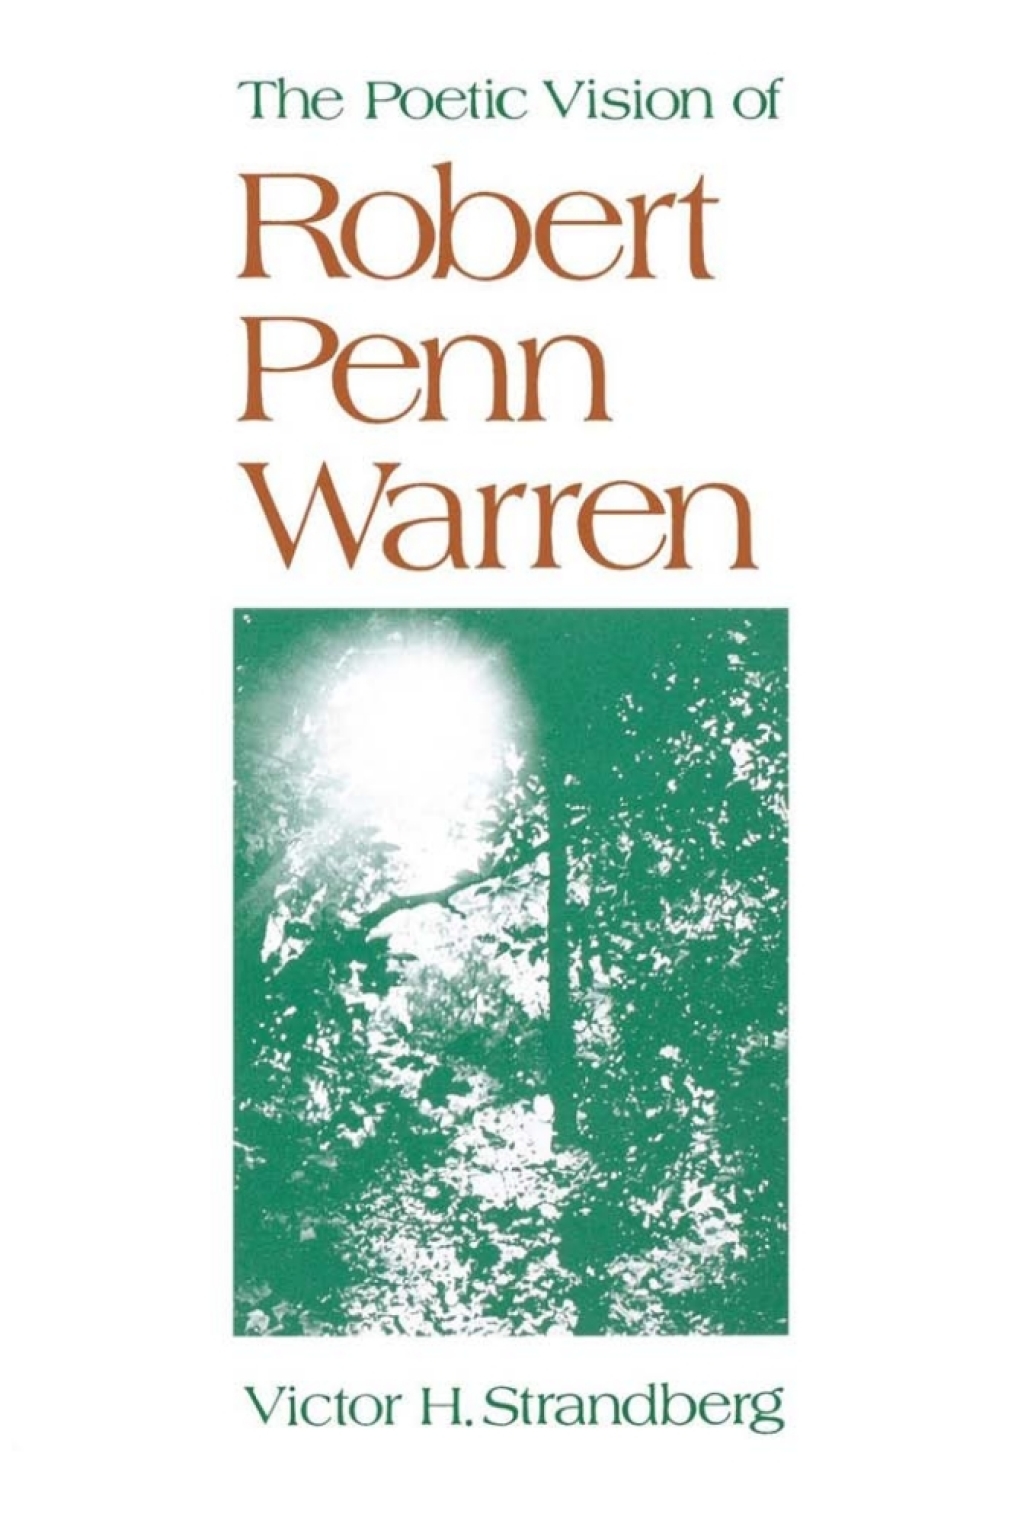 The Poetic Vision of Robert Penn Warren (eBook) - Victor H. Strandberg